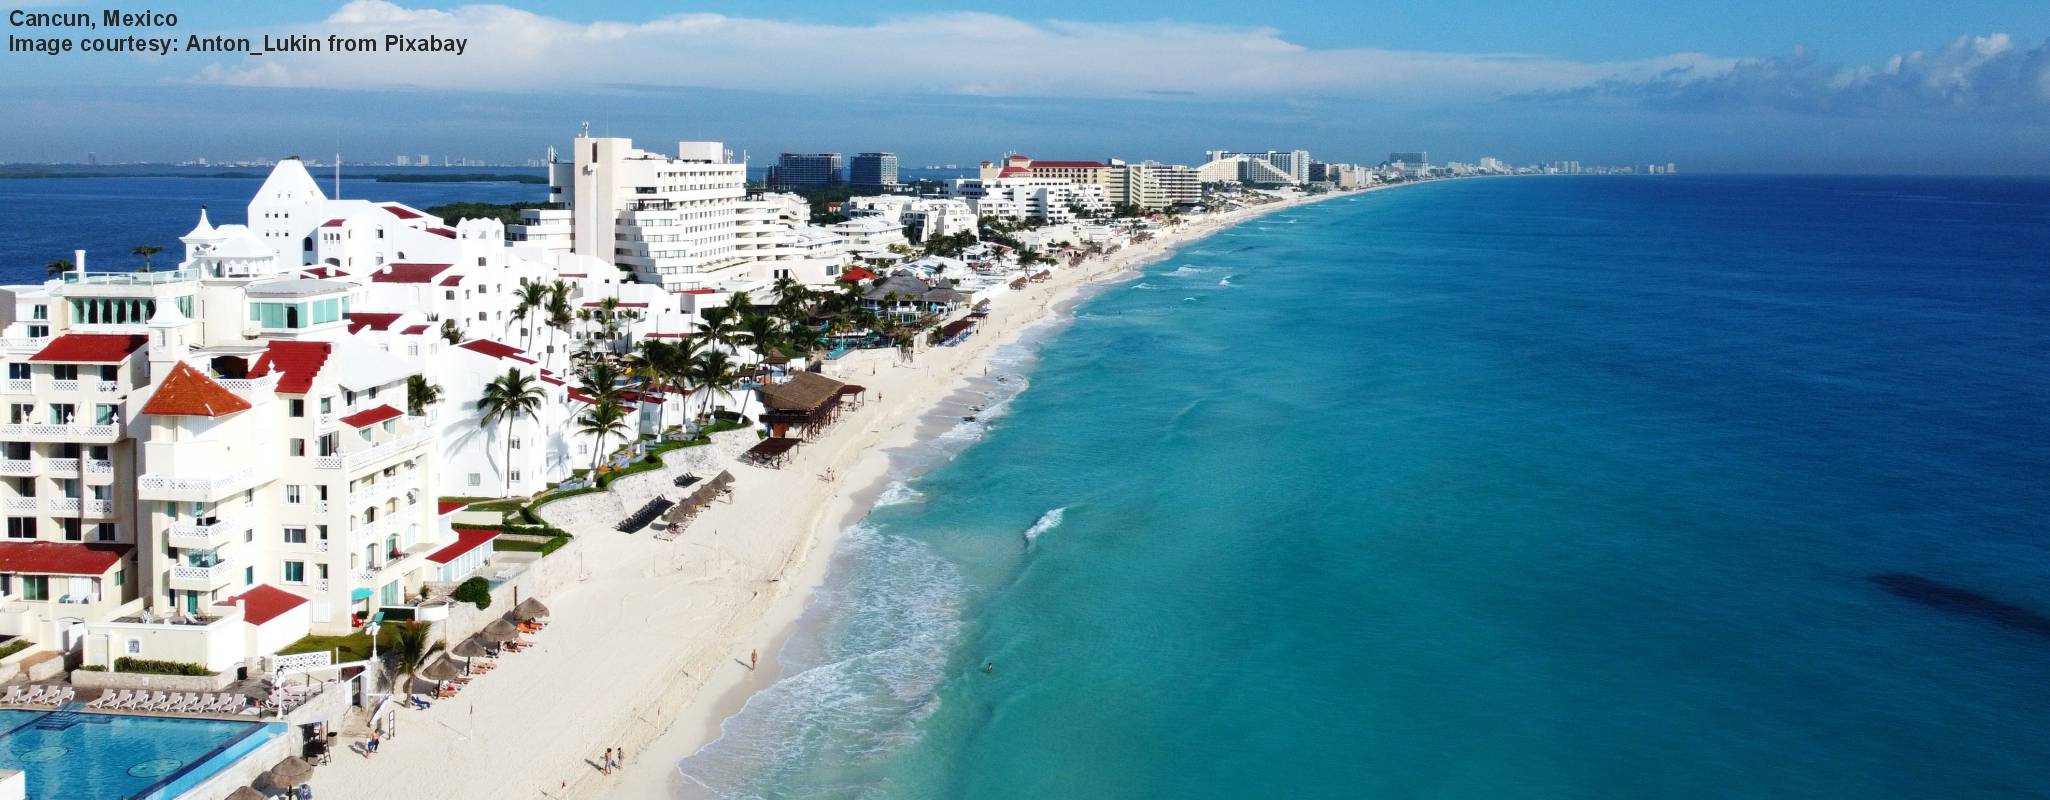 Cancun image